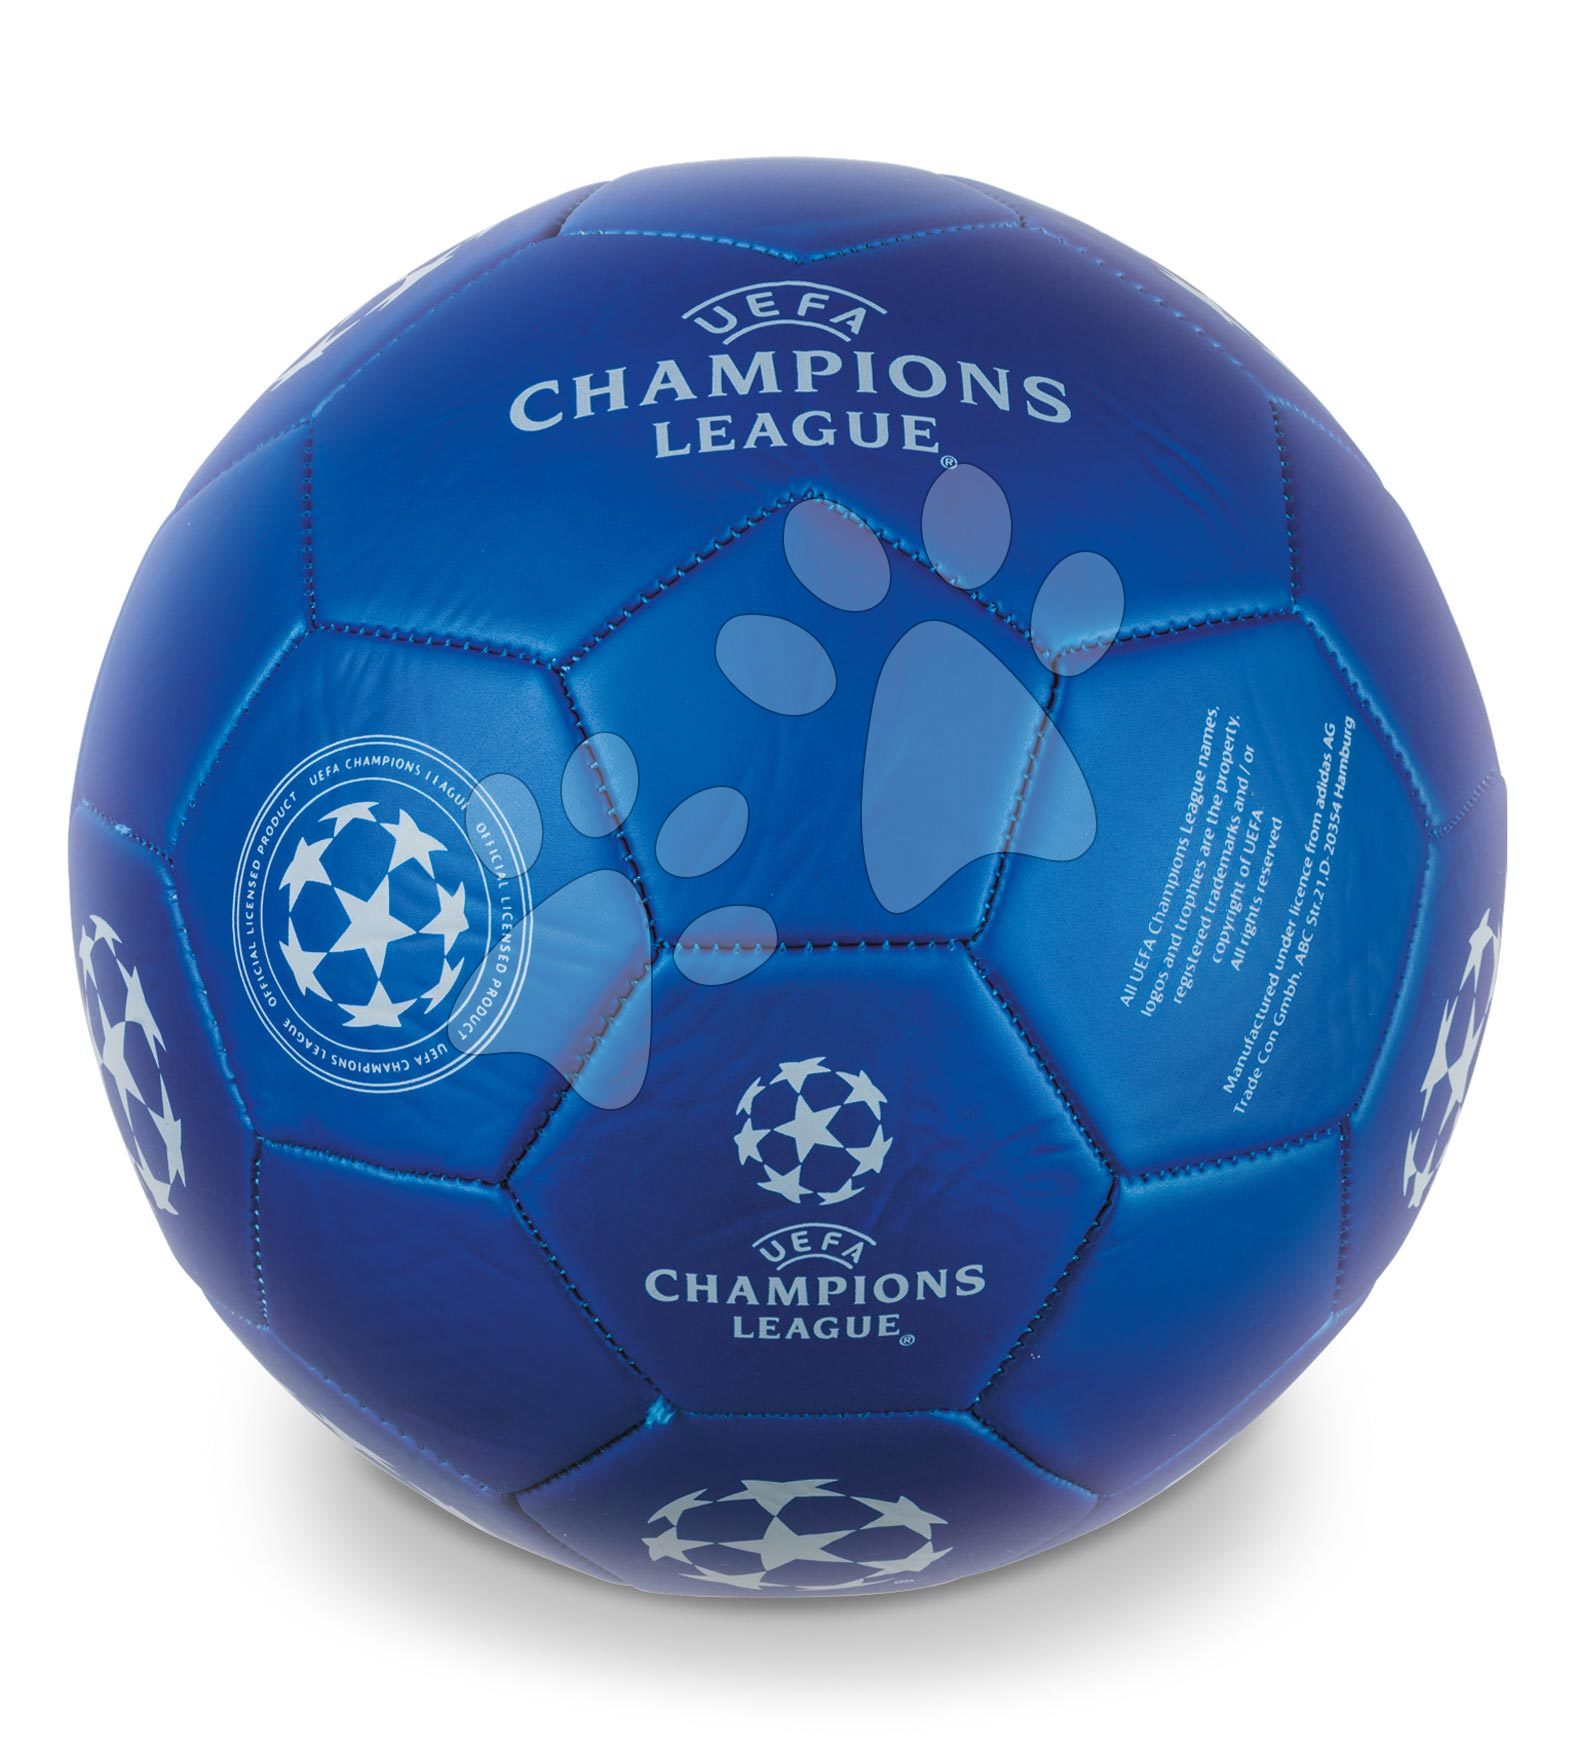 Focilabda varrott Champions League Mondo méret 5 súlya 400 g